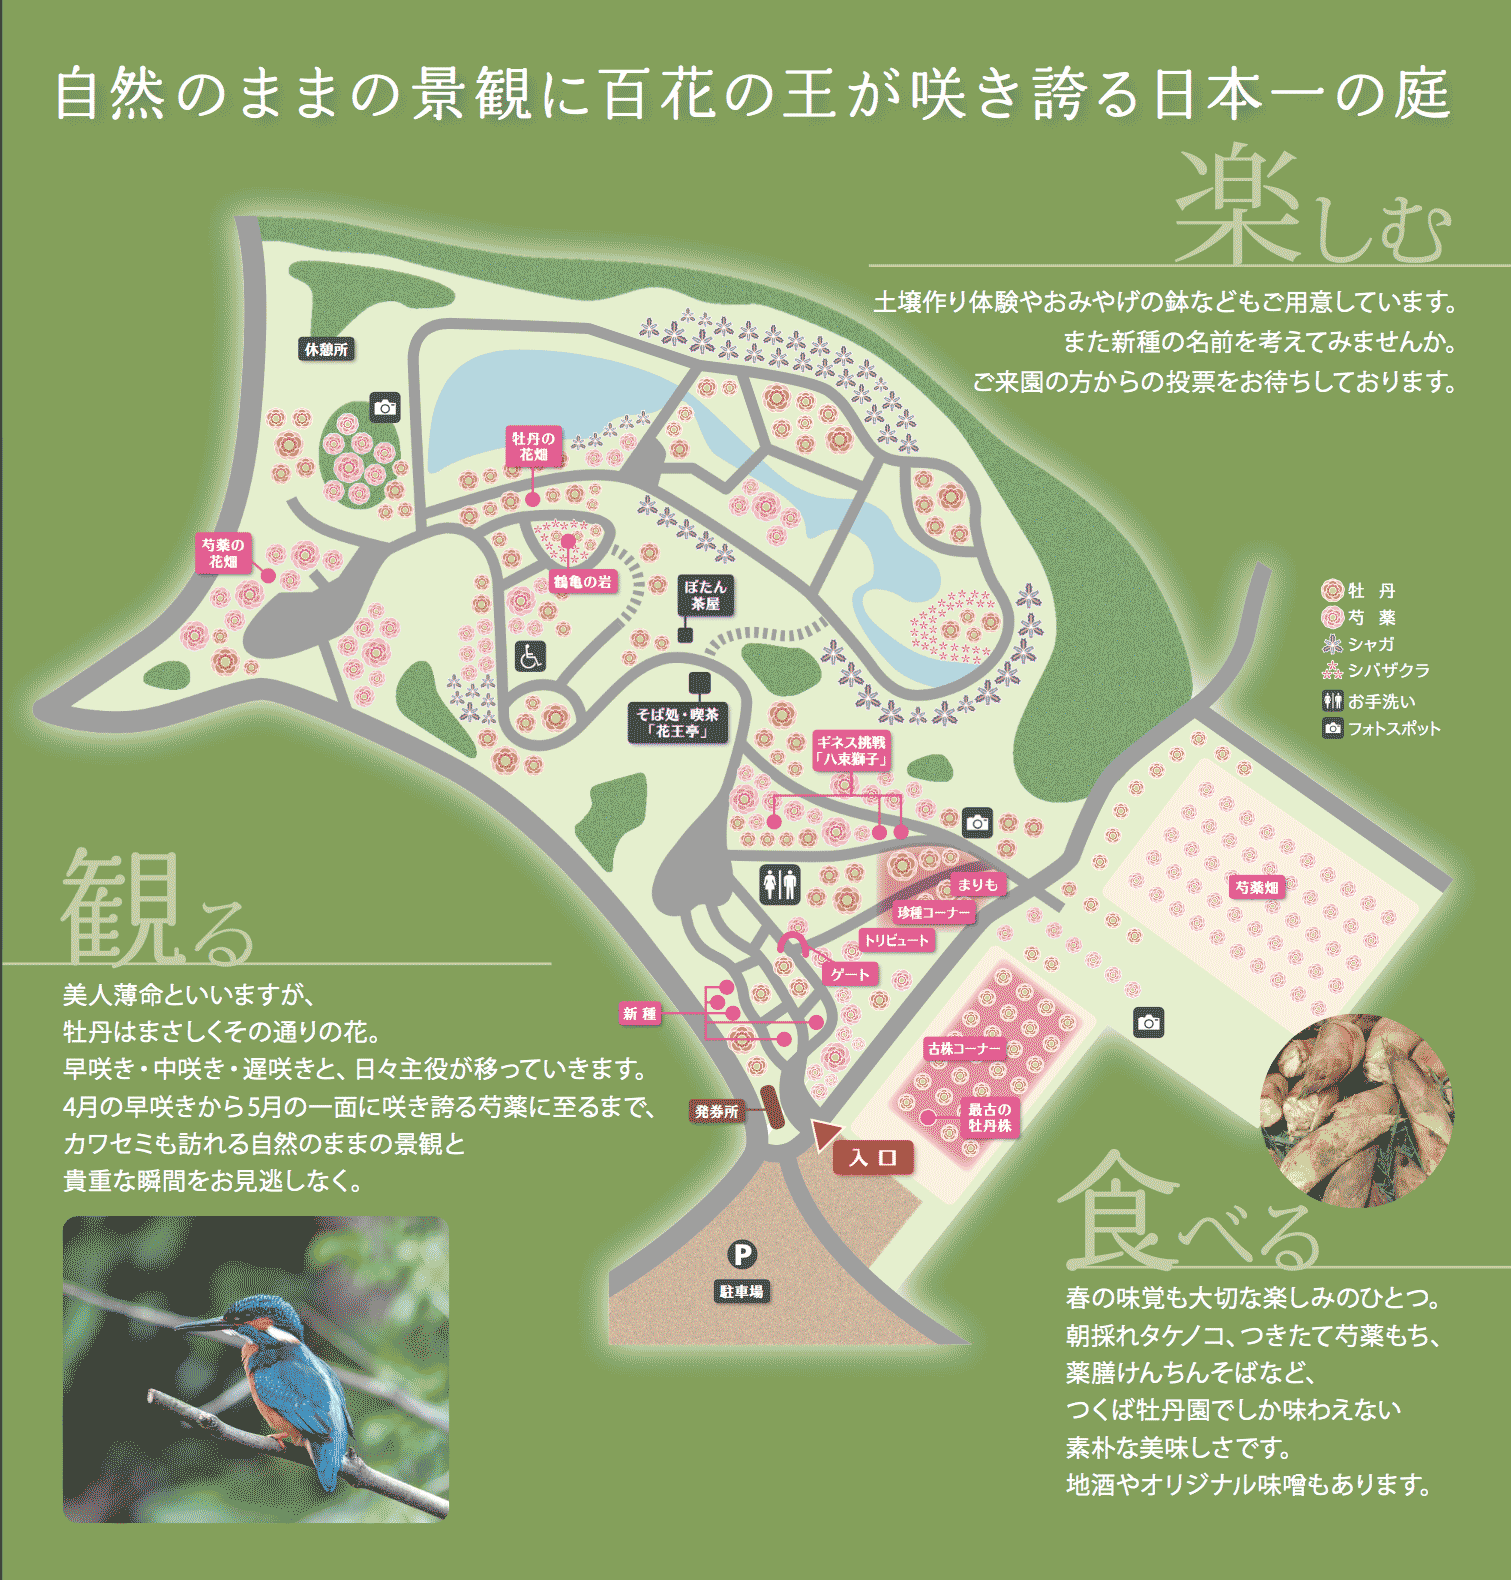 Peony Garden Tokyo Map